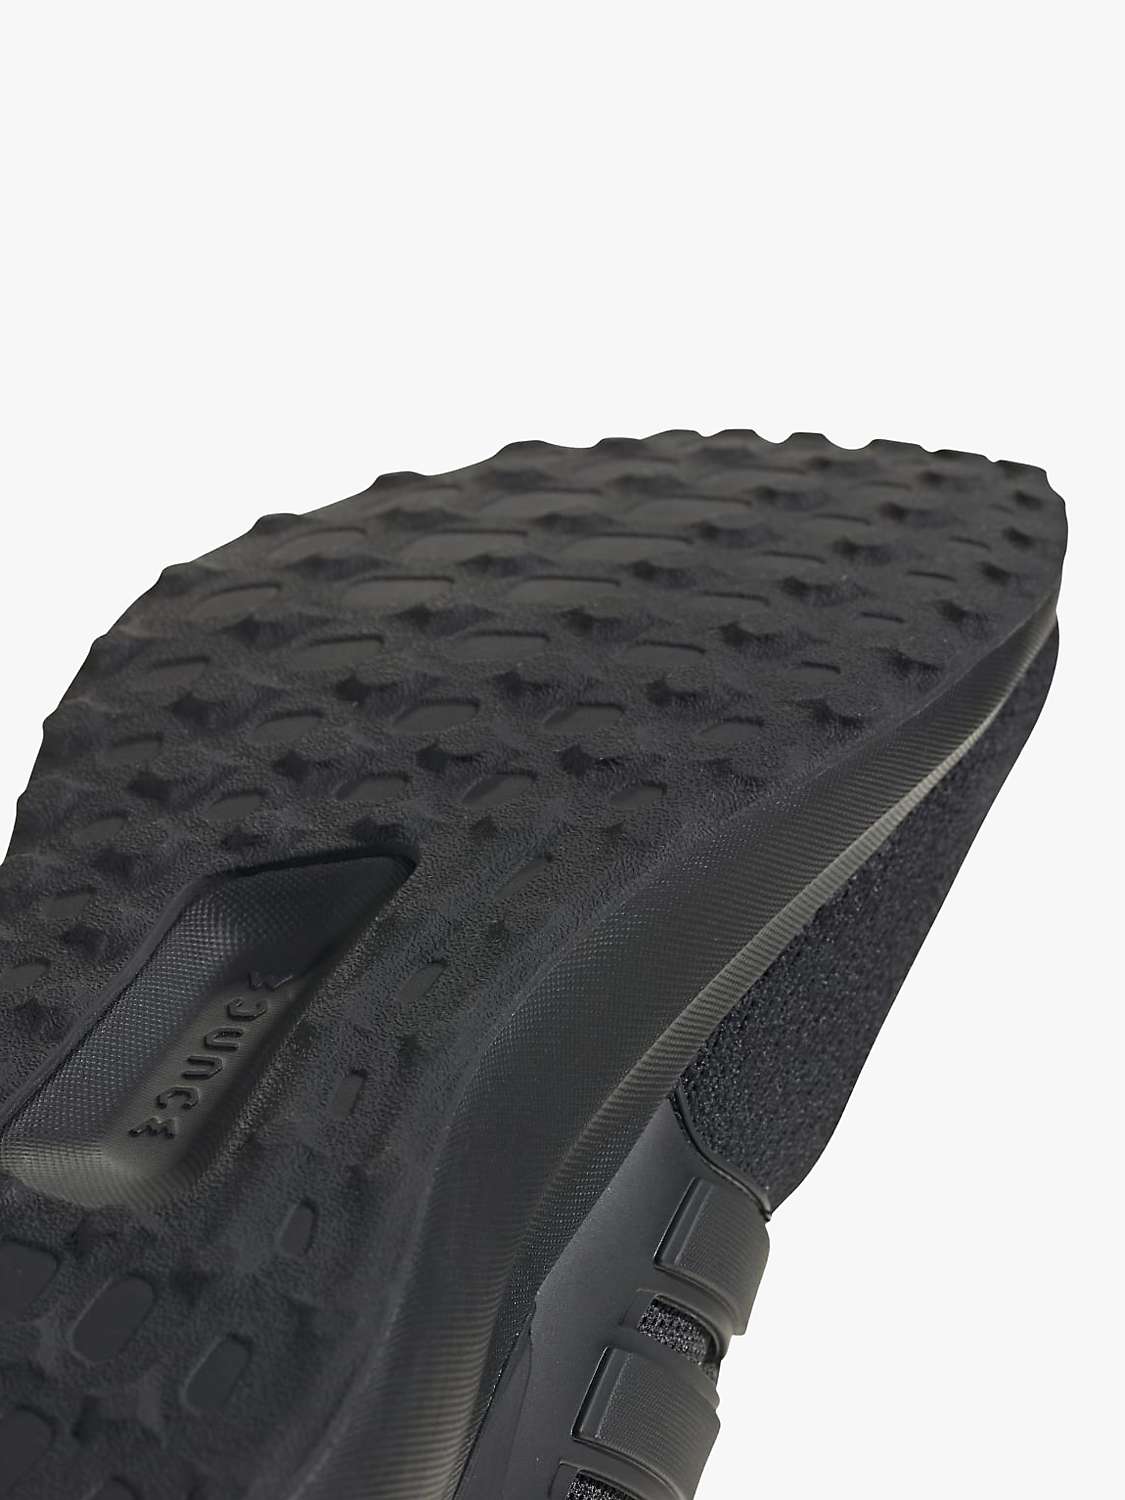 Buy adidas Ultrabounce Men's Running Shoes, Black Online at johnlewis.com